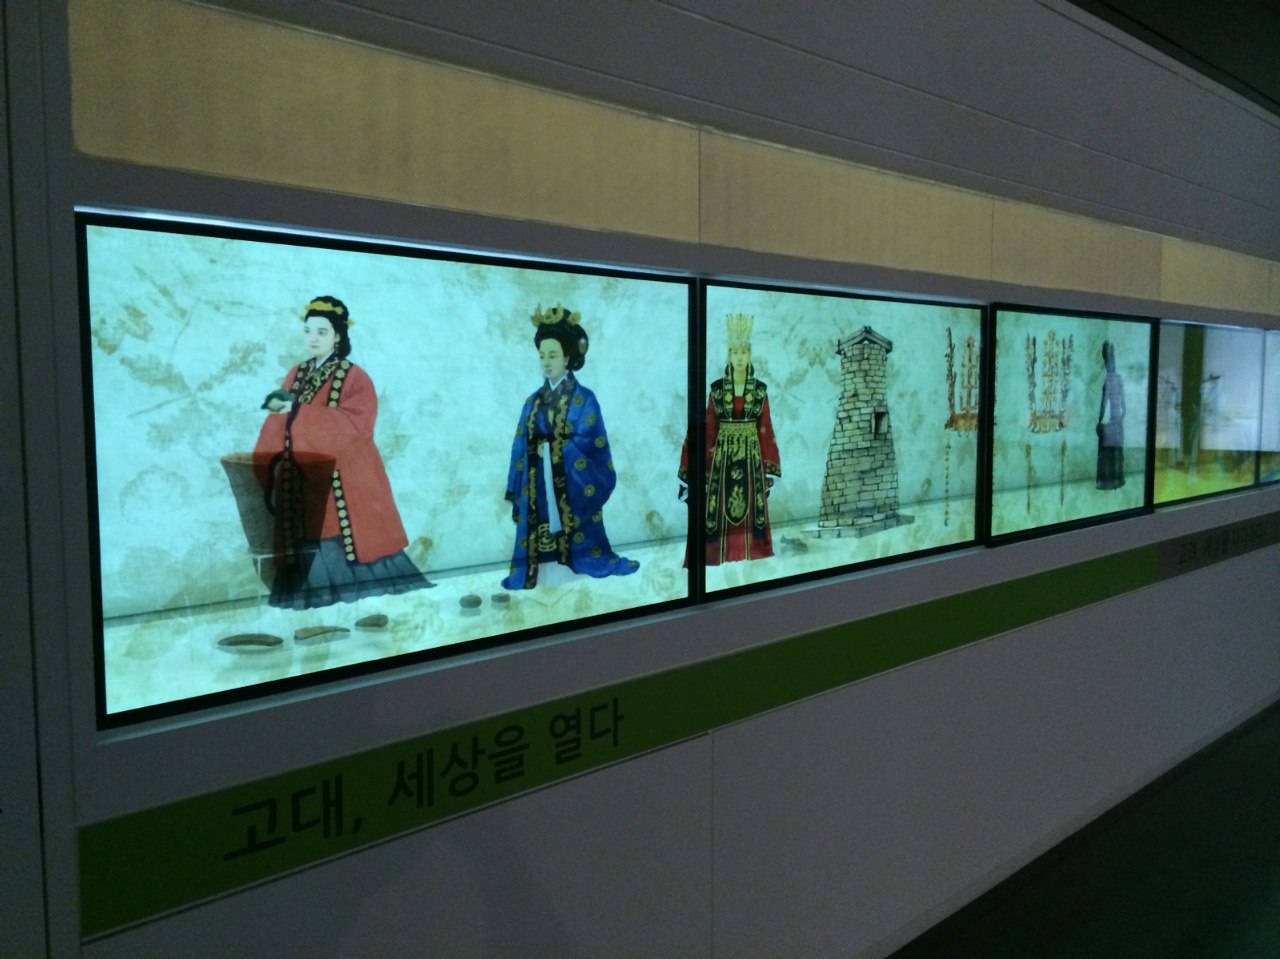 Transparent Display & Digital Video For Museum